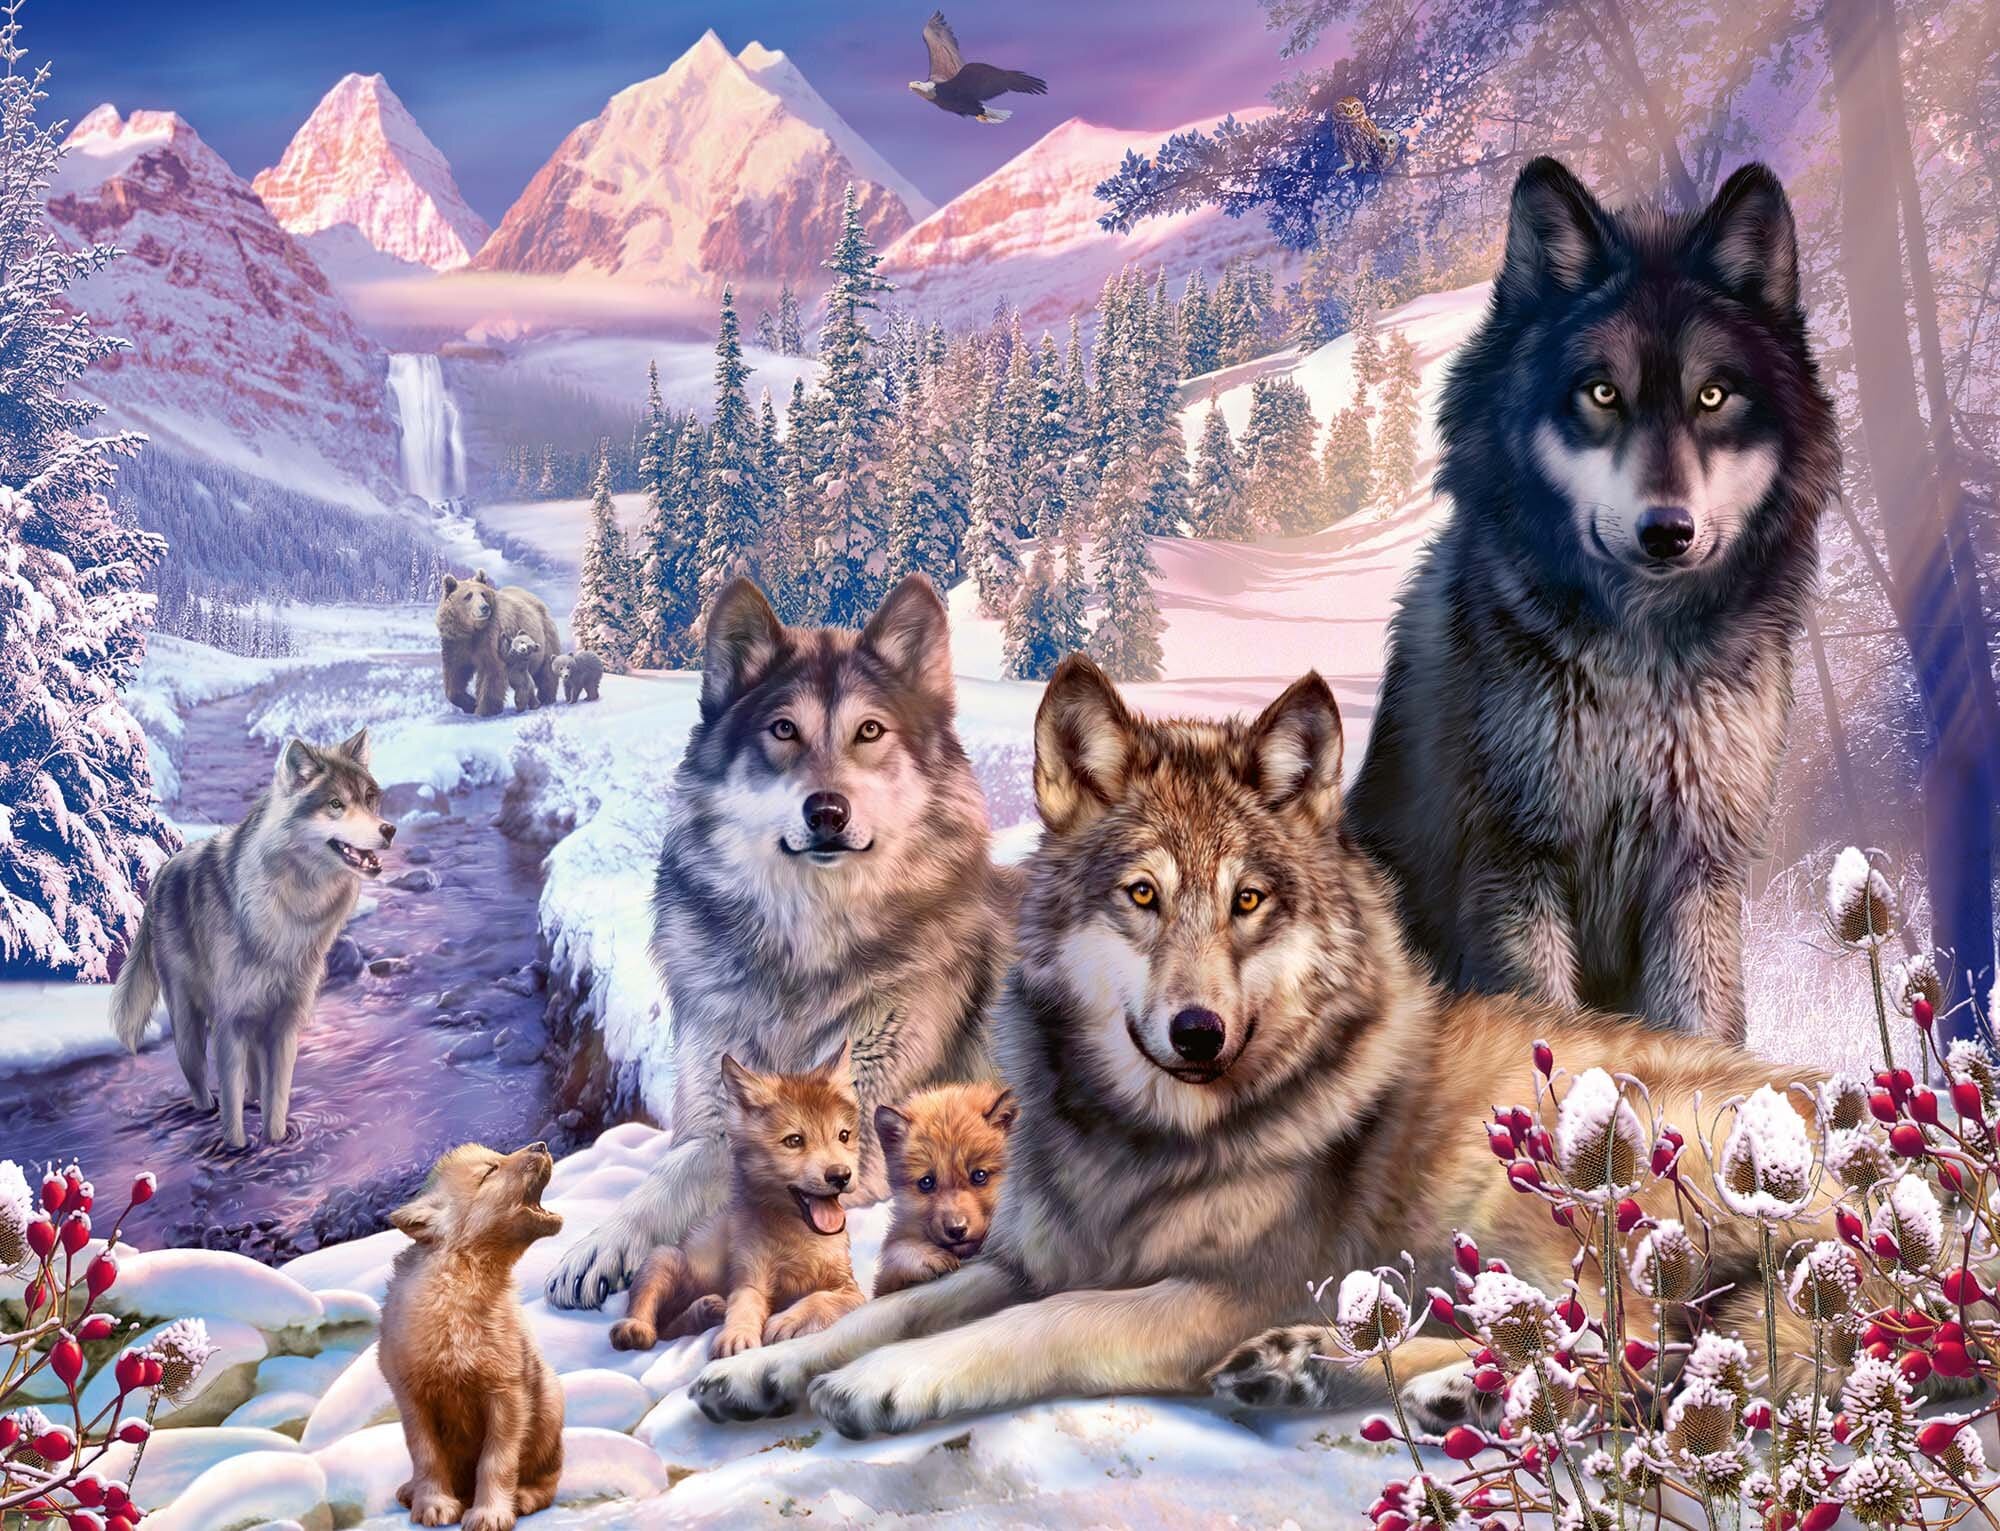 Ravensburger Puslespill, Wolves in the Snow 2000 brikker